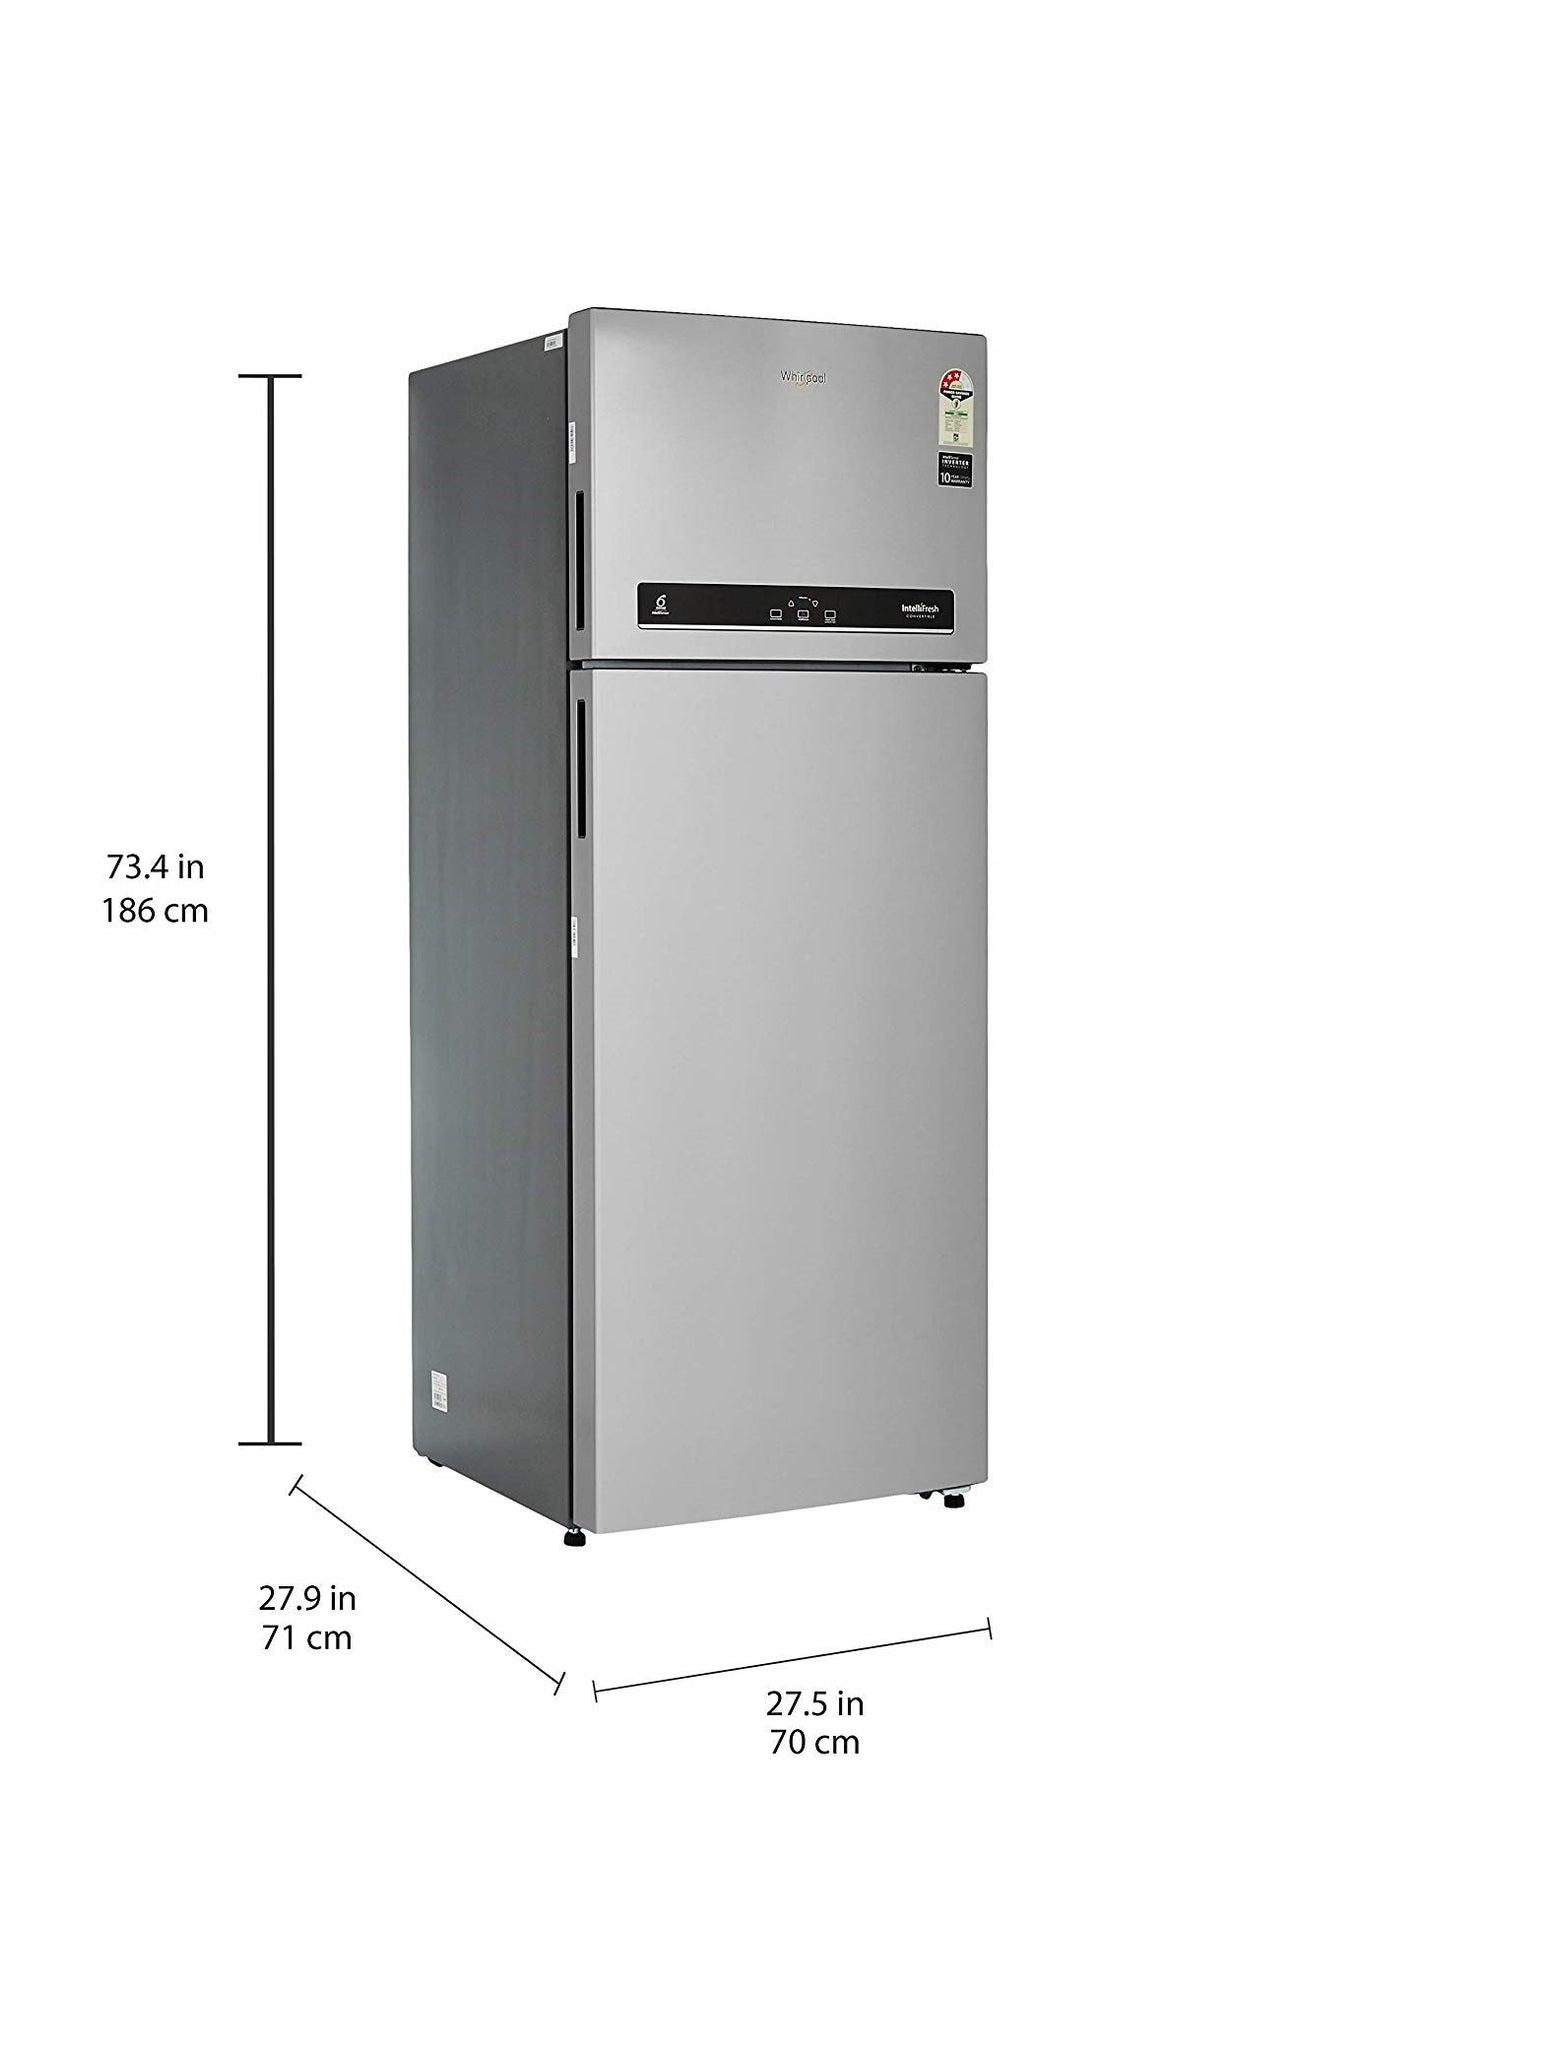 Whirlpool INTELLIFRESH INV CNV 515 3S 500 L 3 Star Inverter Frost-Free Double Door Refrigerator Alpha Steel (21305)